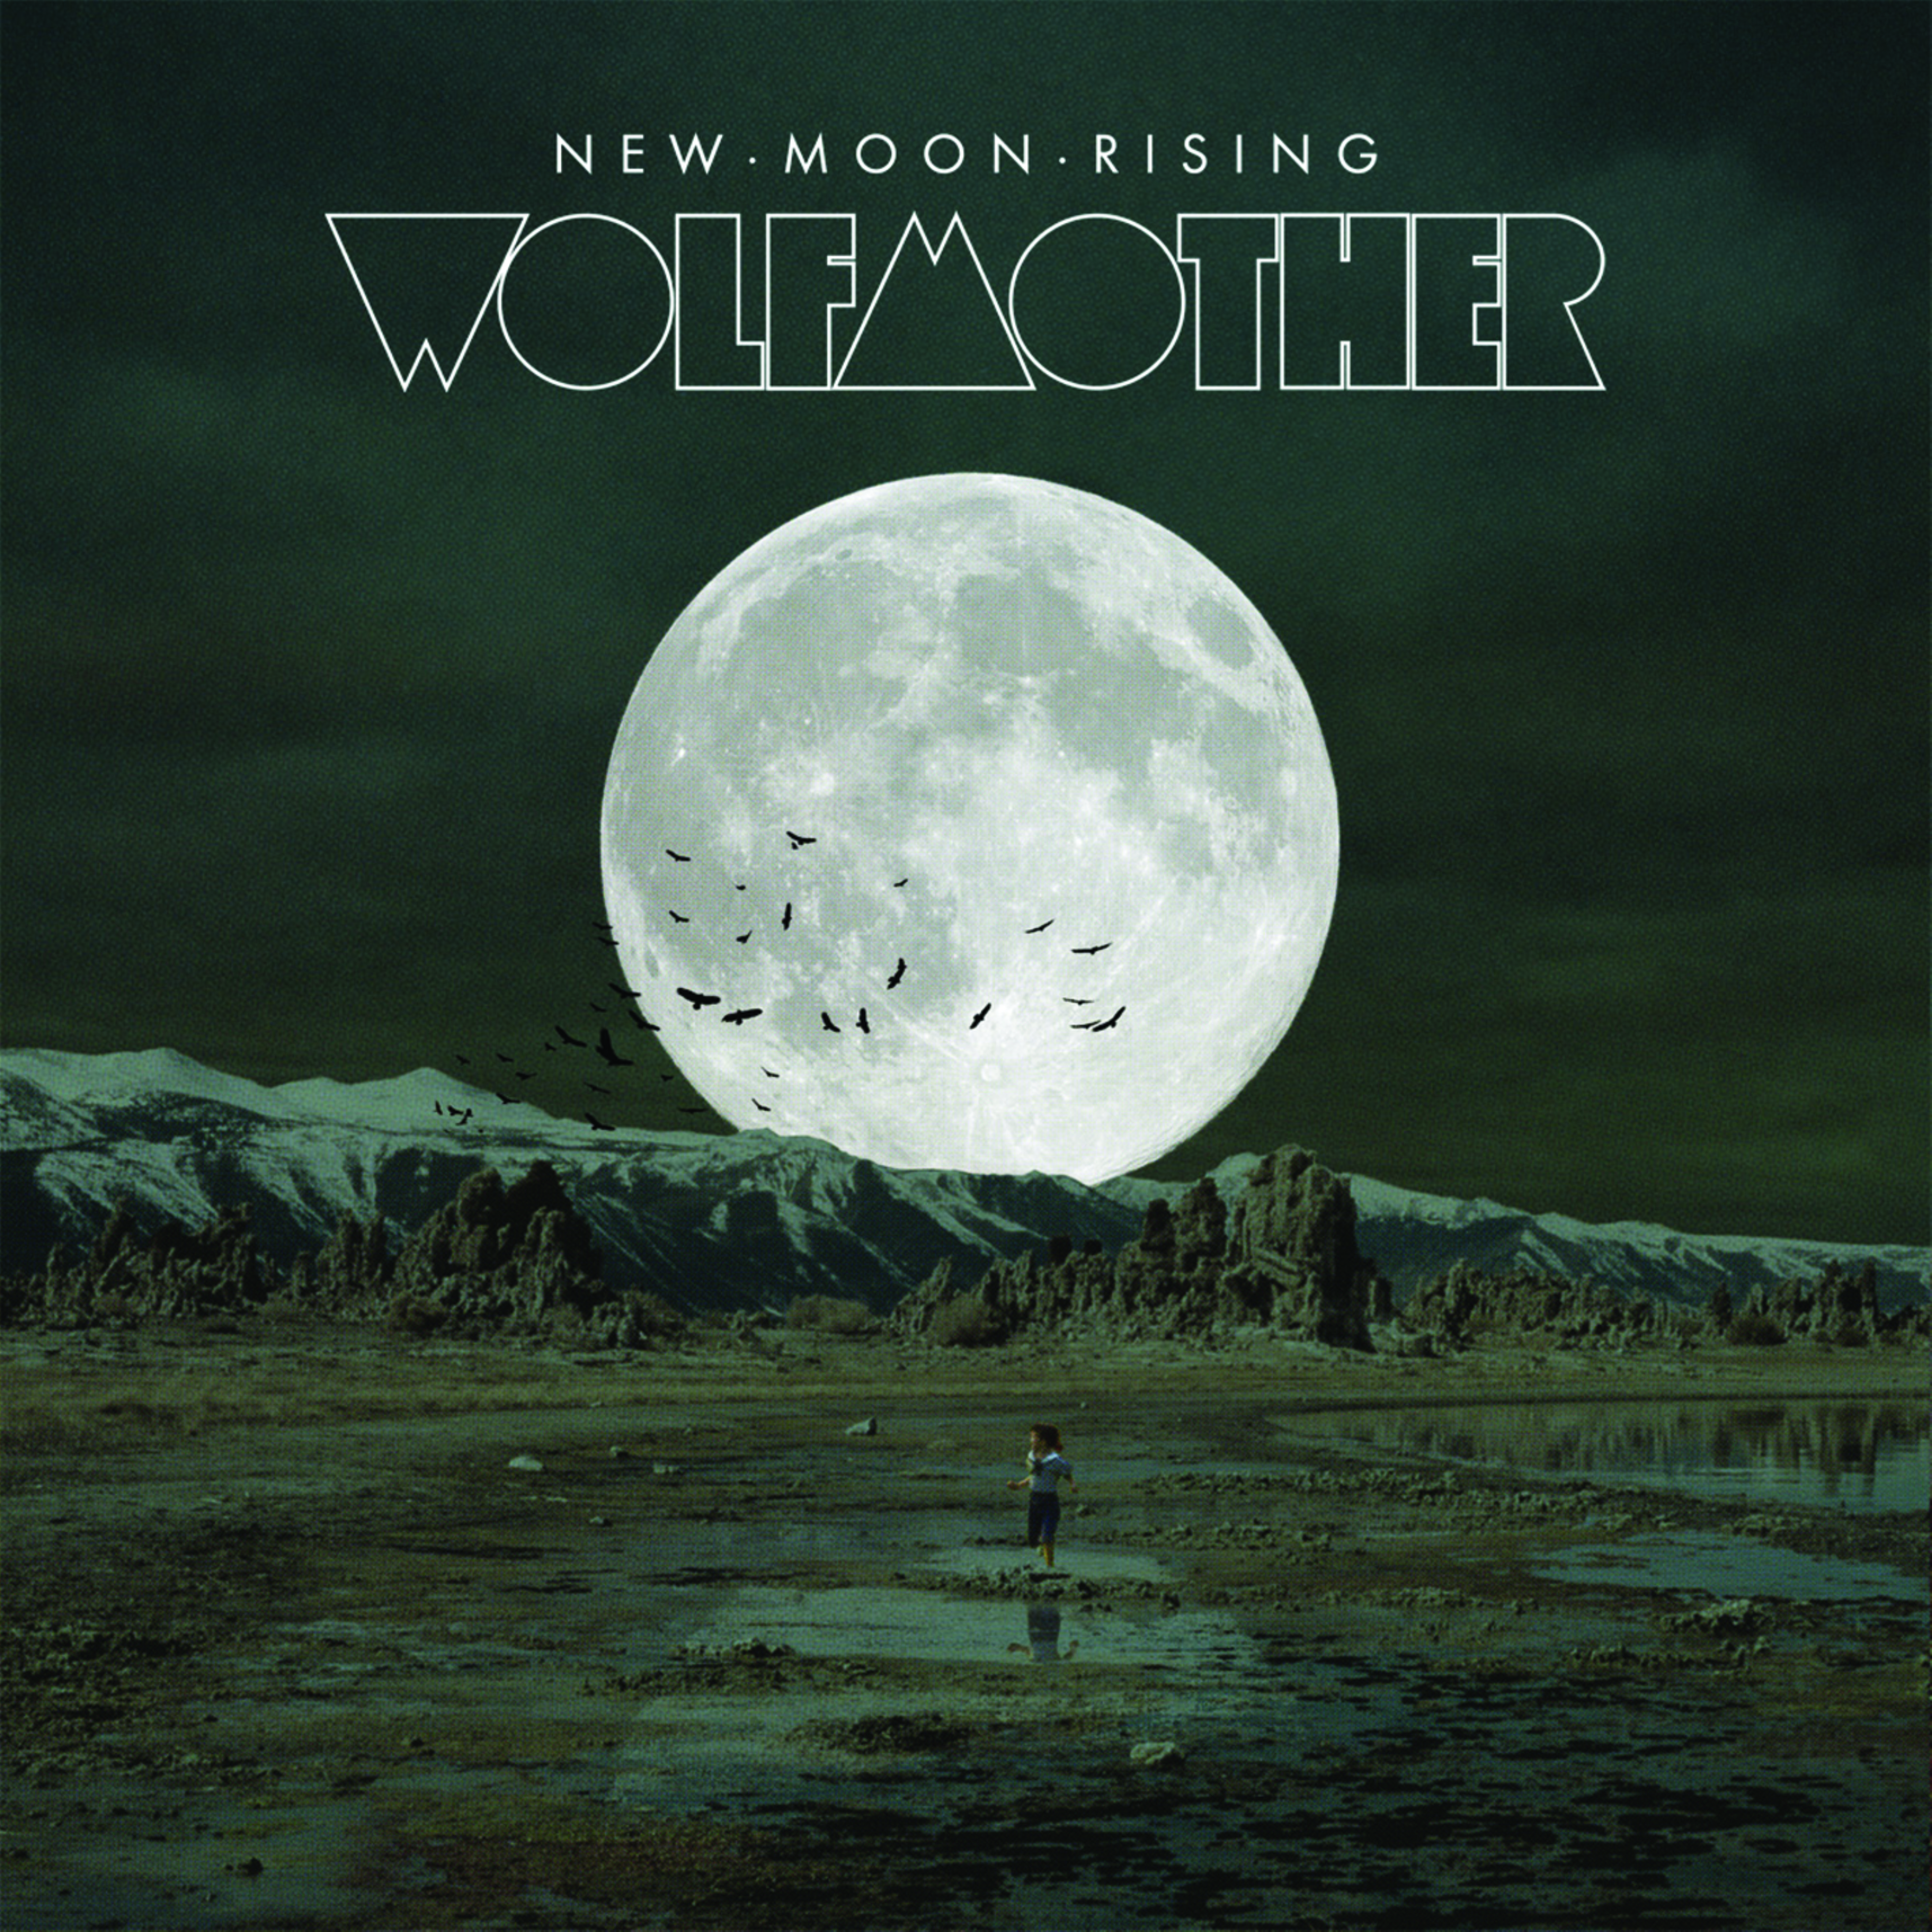 Moon rising перевод. Wolfmother Cosmic Egg 2009. Группа Wolfmother. New Moon Rising Wolfmother. Wolfmother Wolfmother album.